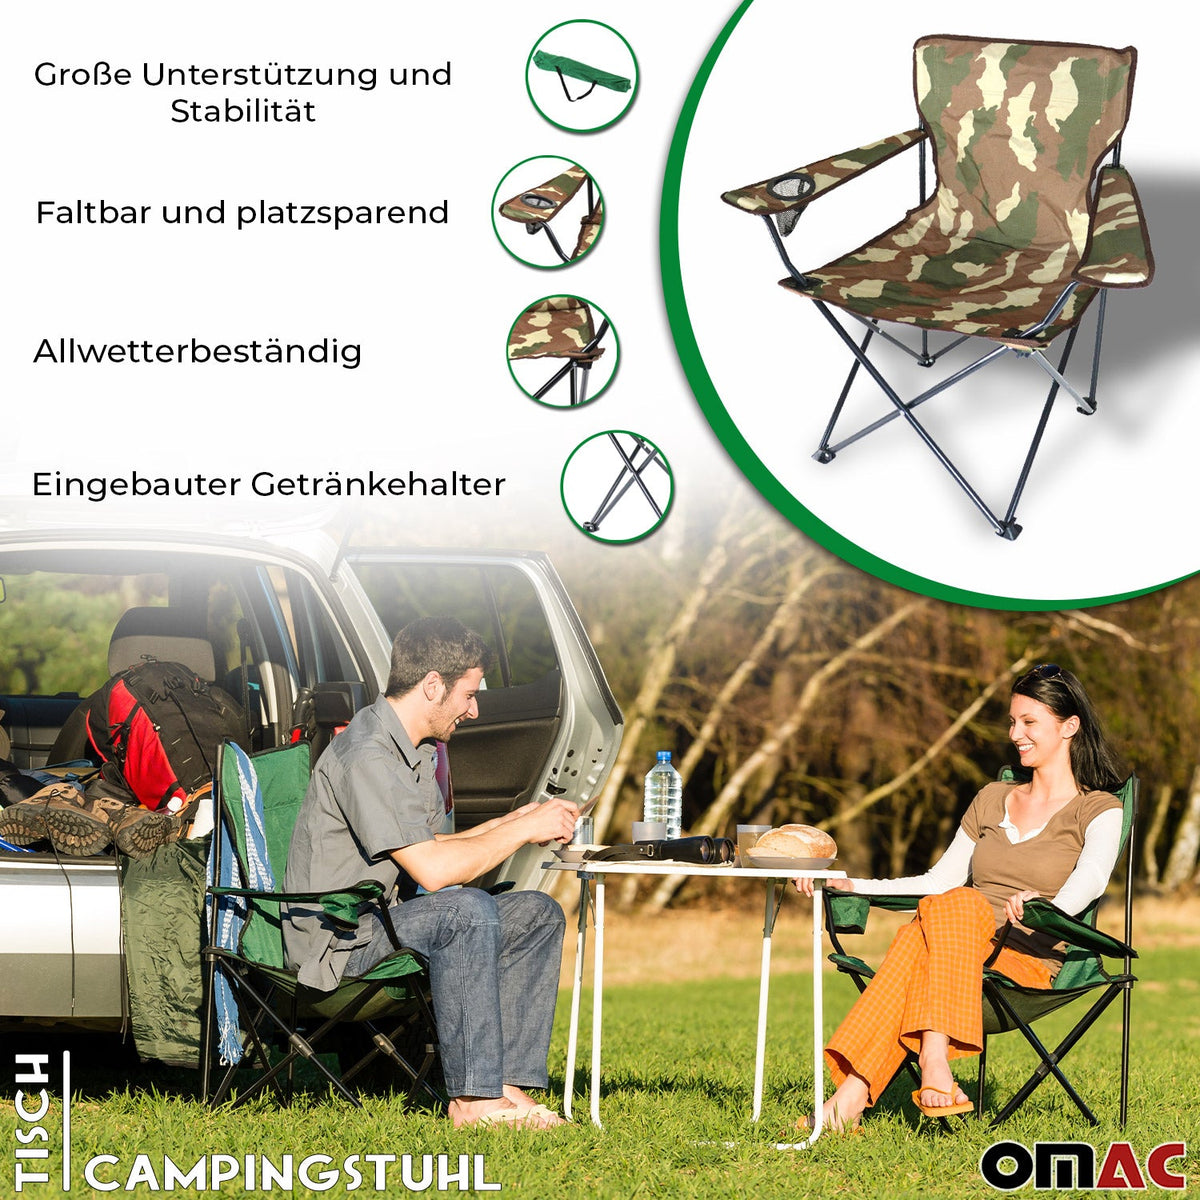 Campingstuhl Klappstuhl Gartenstuhl Anglerstuhl Picknick BBQ Tarnung Gemustert - Omac Shop GmbH